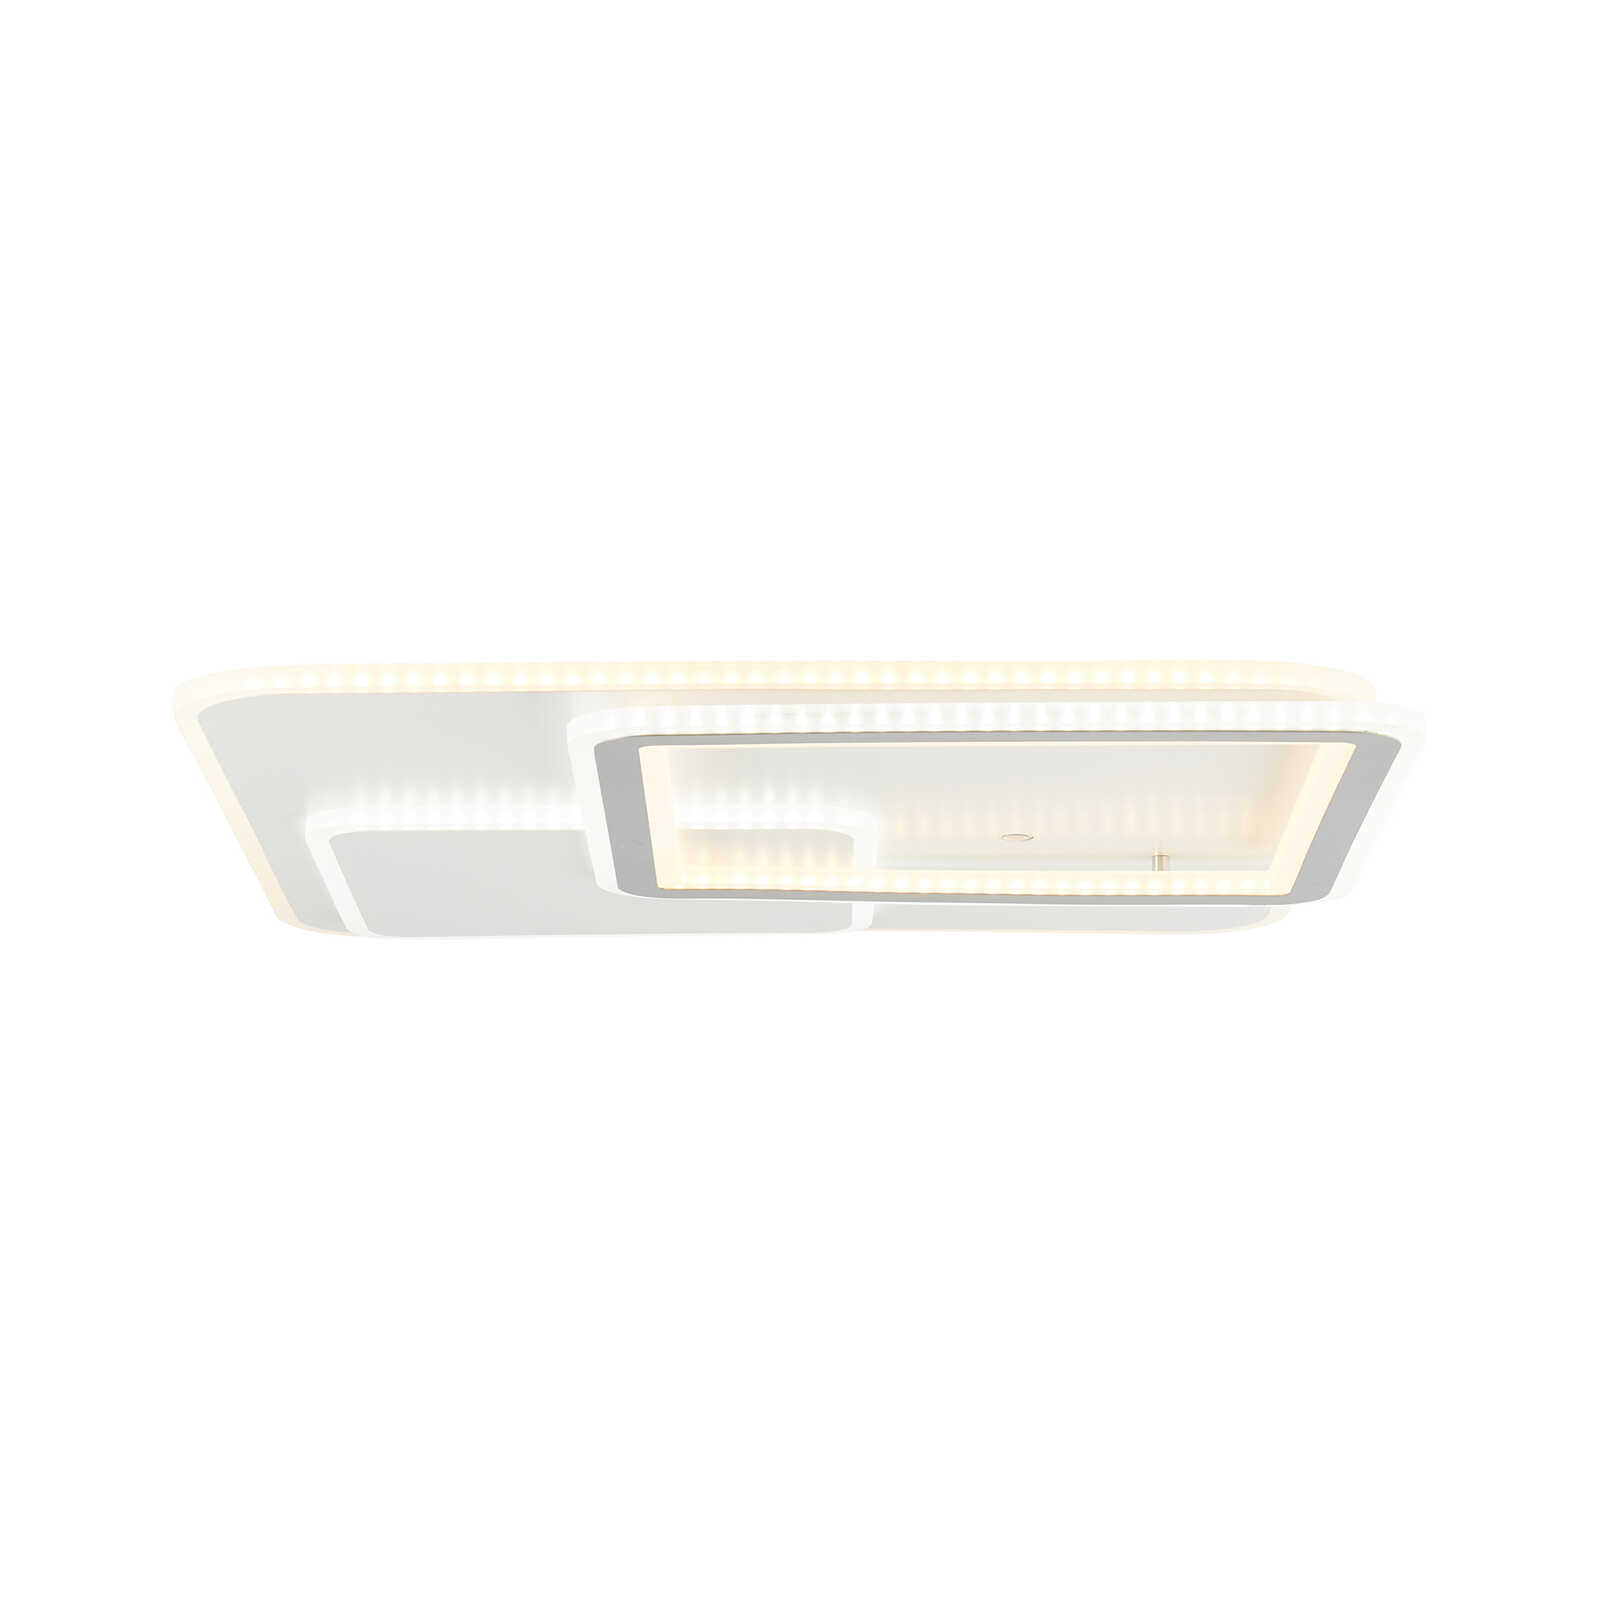 Plastic ceiling light - Nael - Grey
